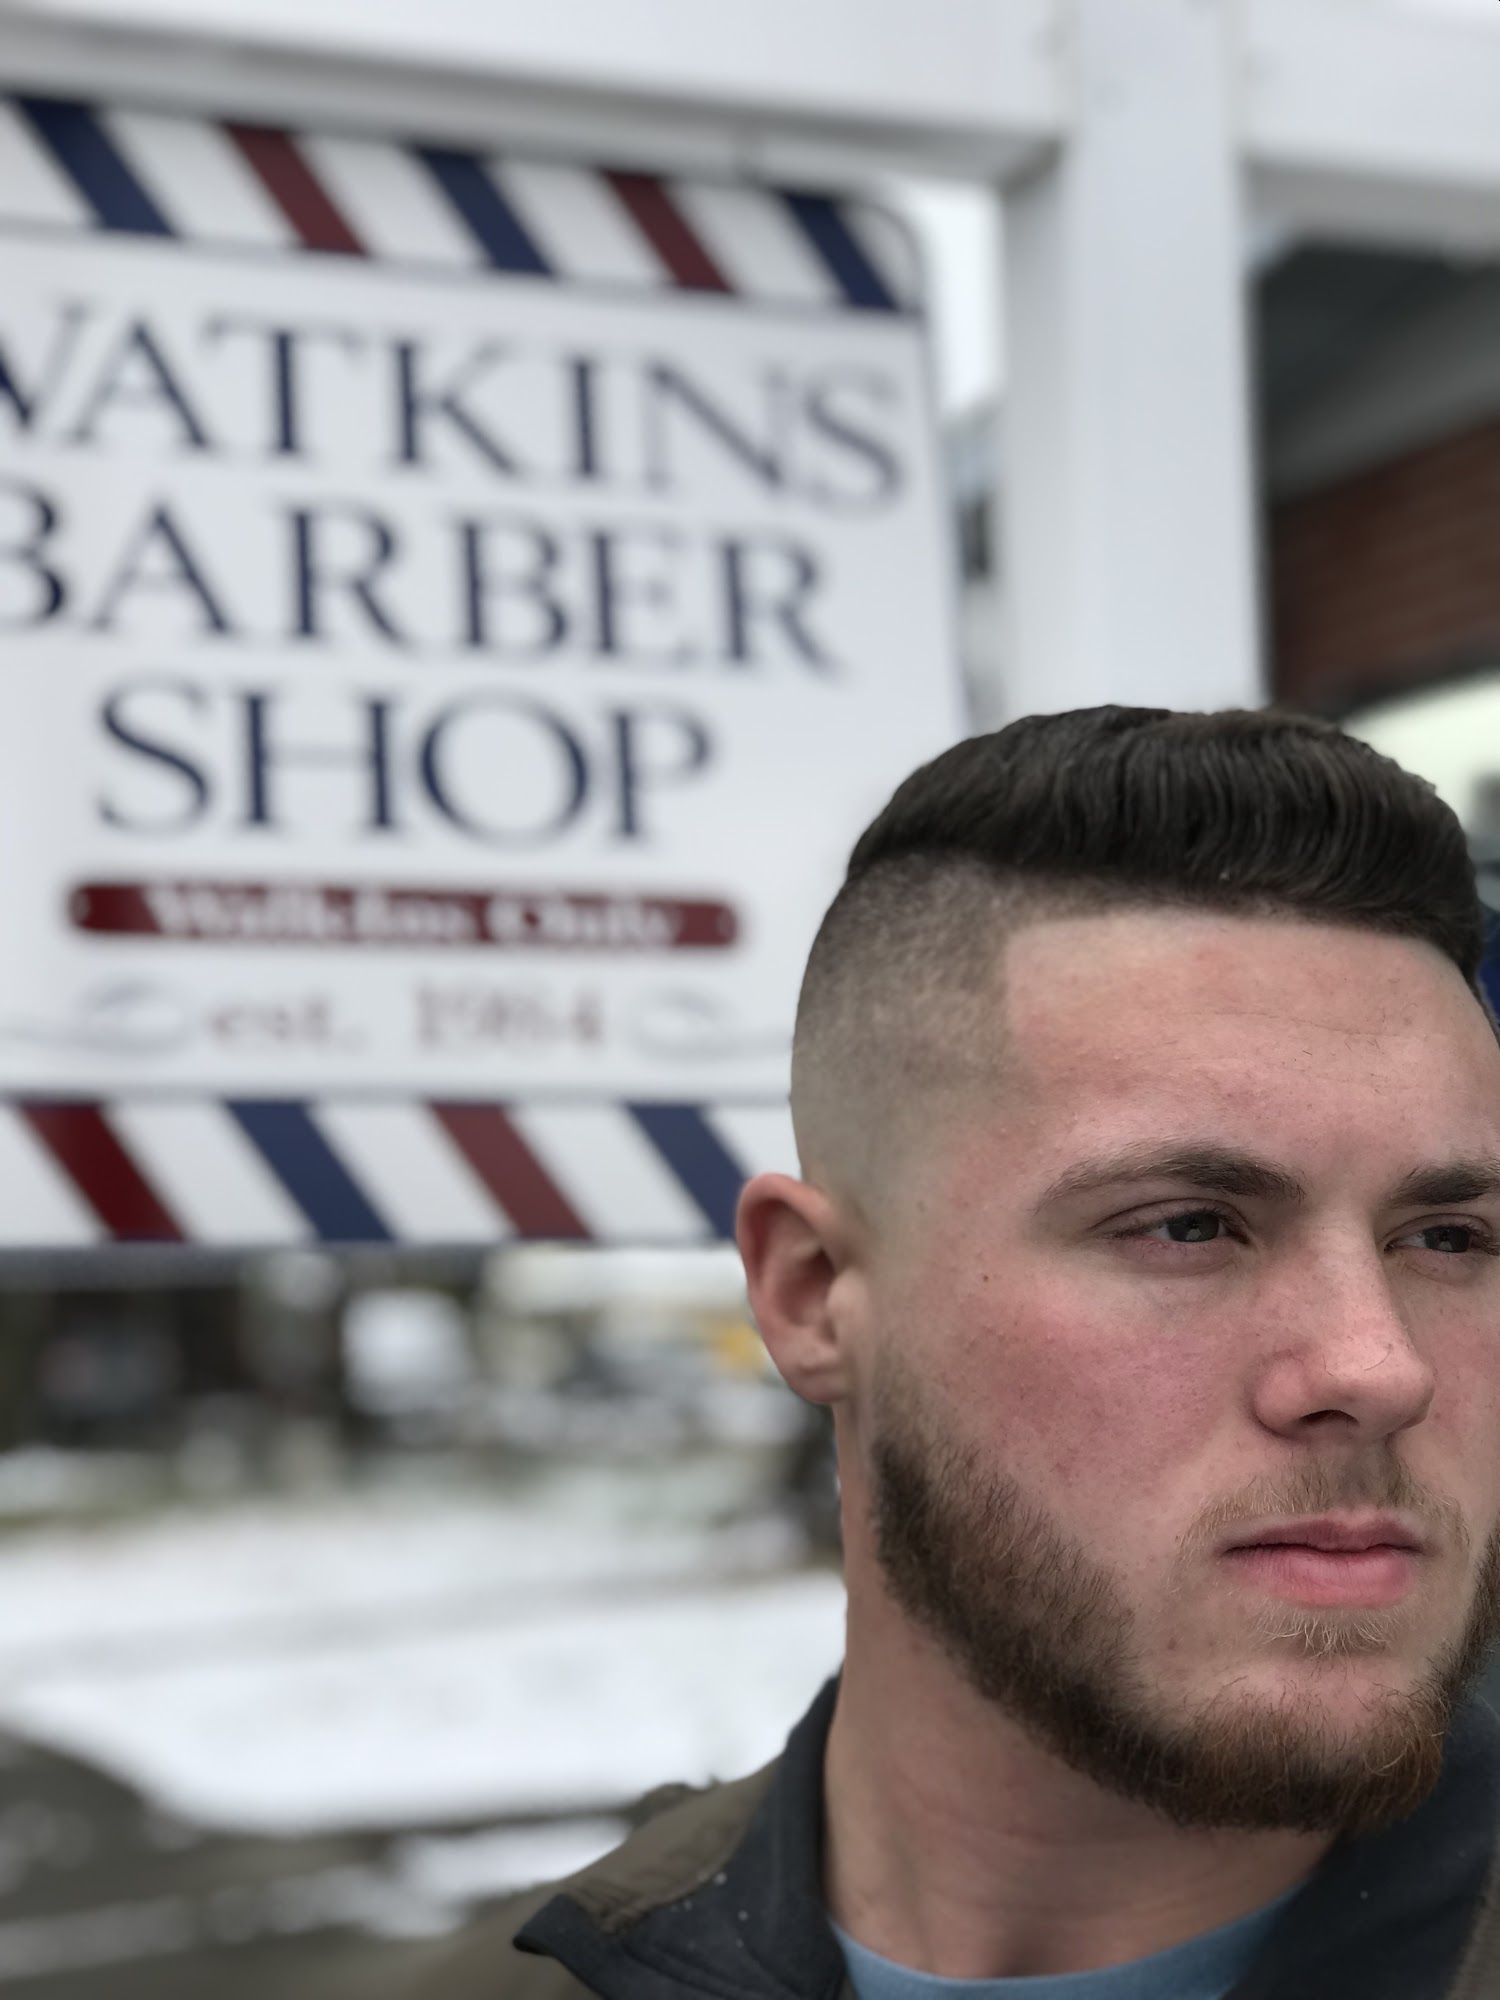 Watkins barber shop 203 E Pine St, Athens Pennsylvania 18810